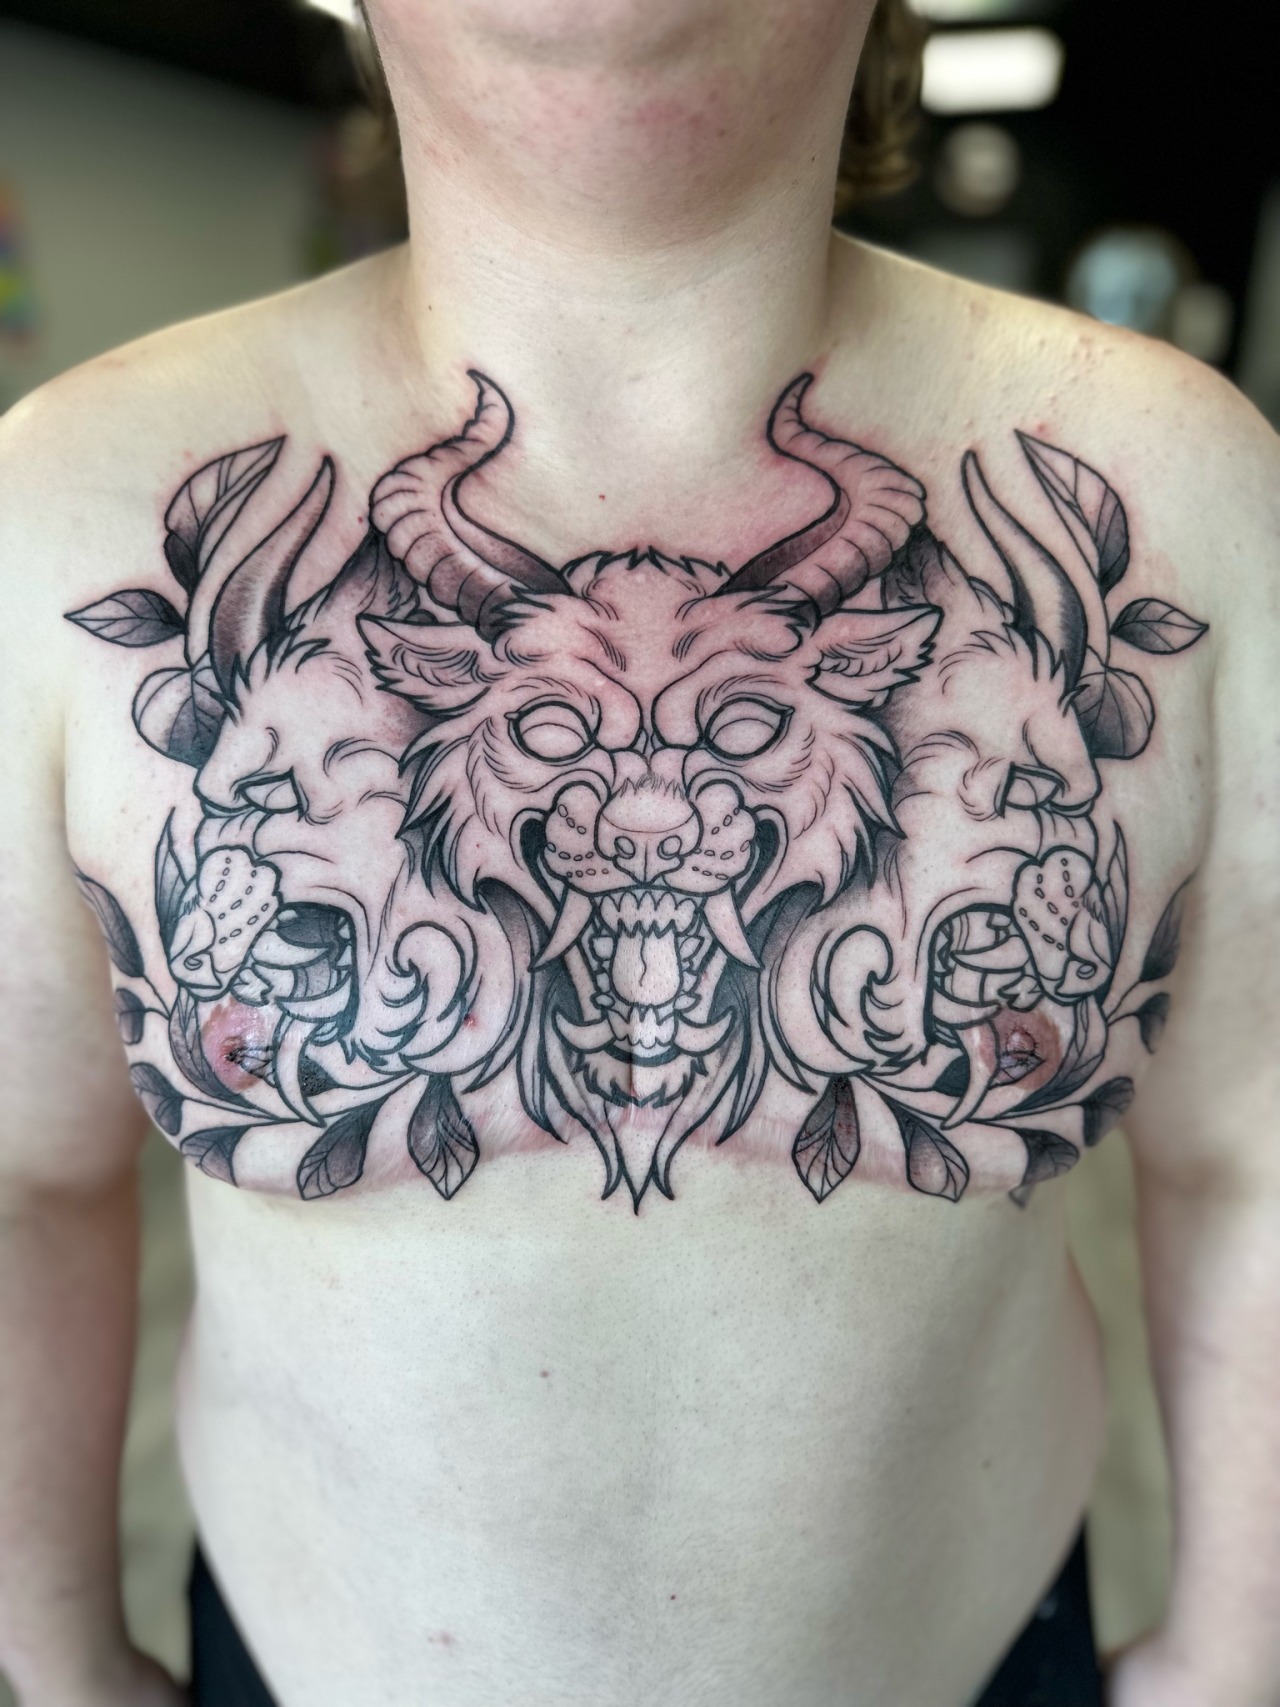 Dark lines and graphic creepy tattoos - Tattoo Life